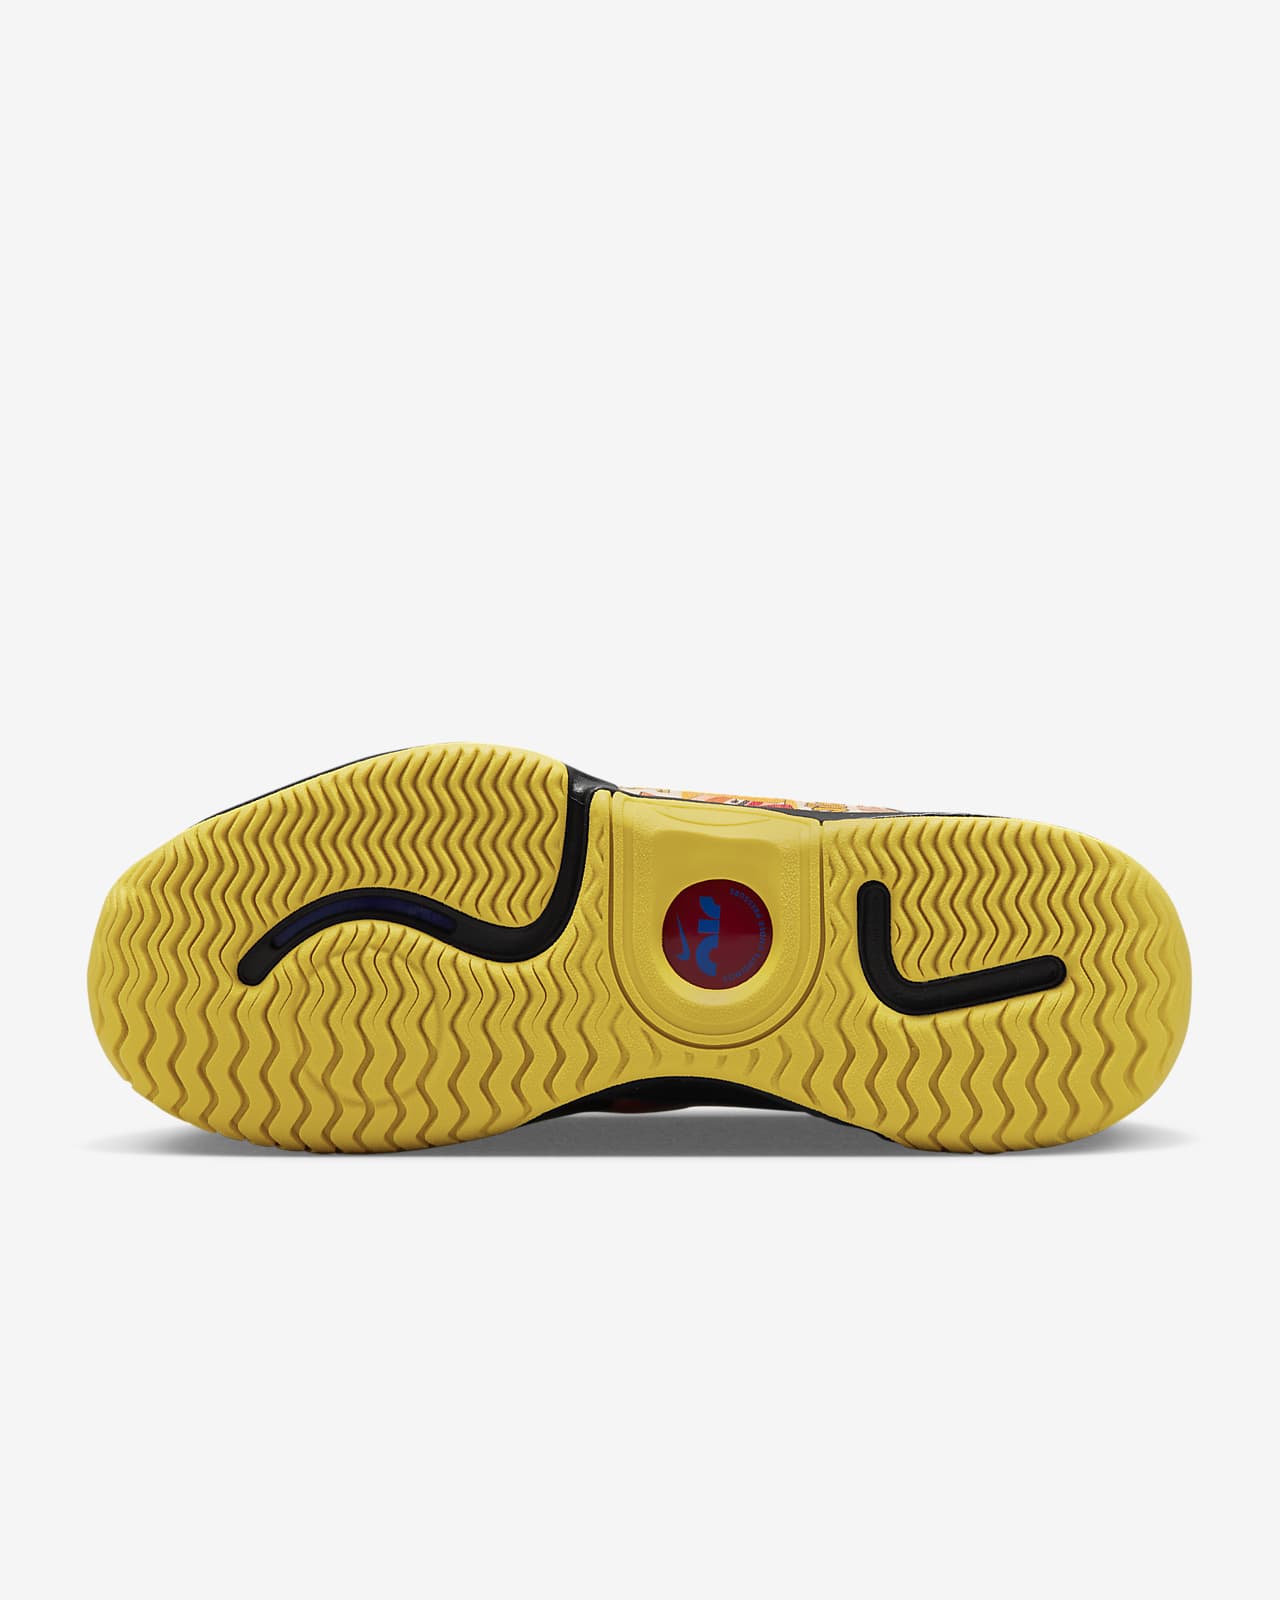 Nike Air Zoom GP Turbo Naomi Osaka Women's Tennis Shoe Black/yellow